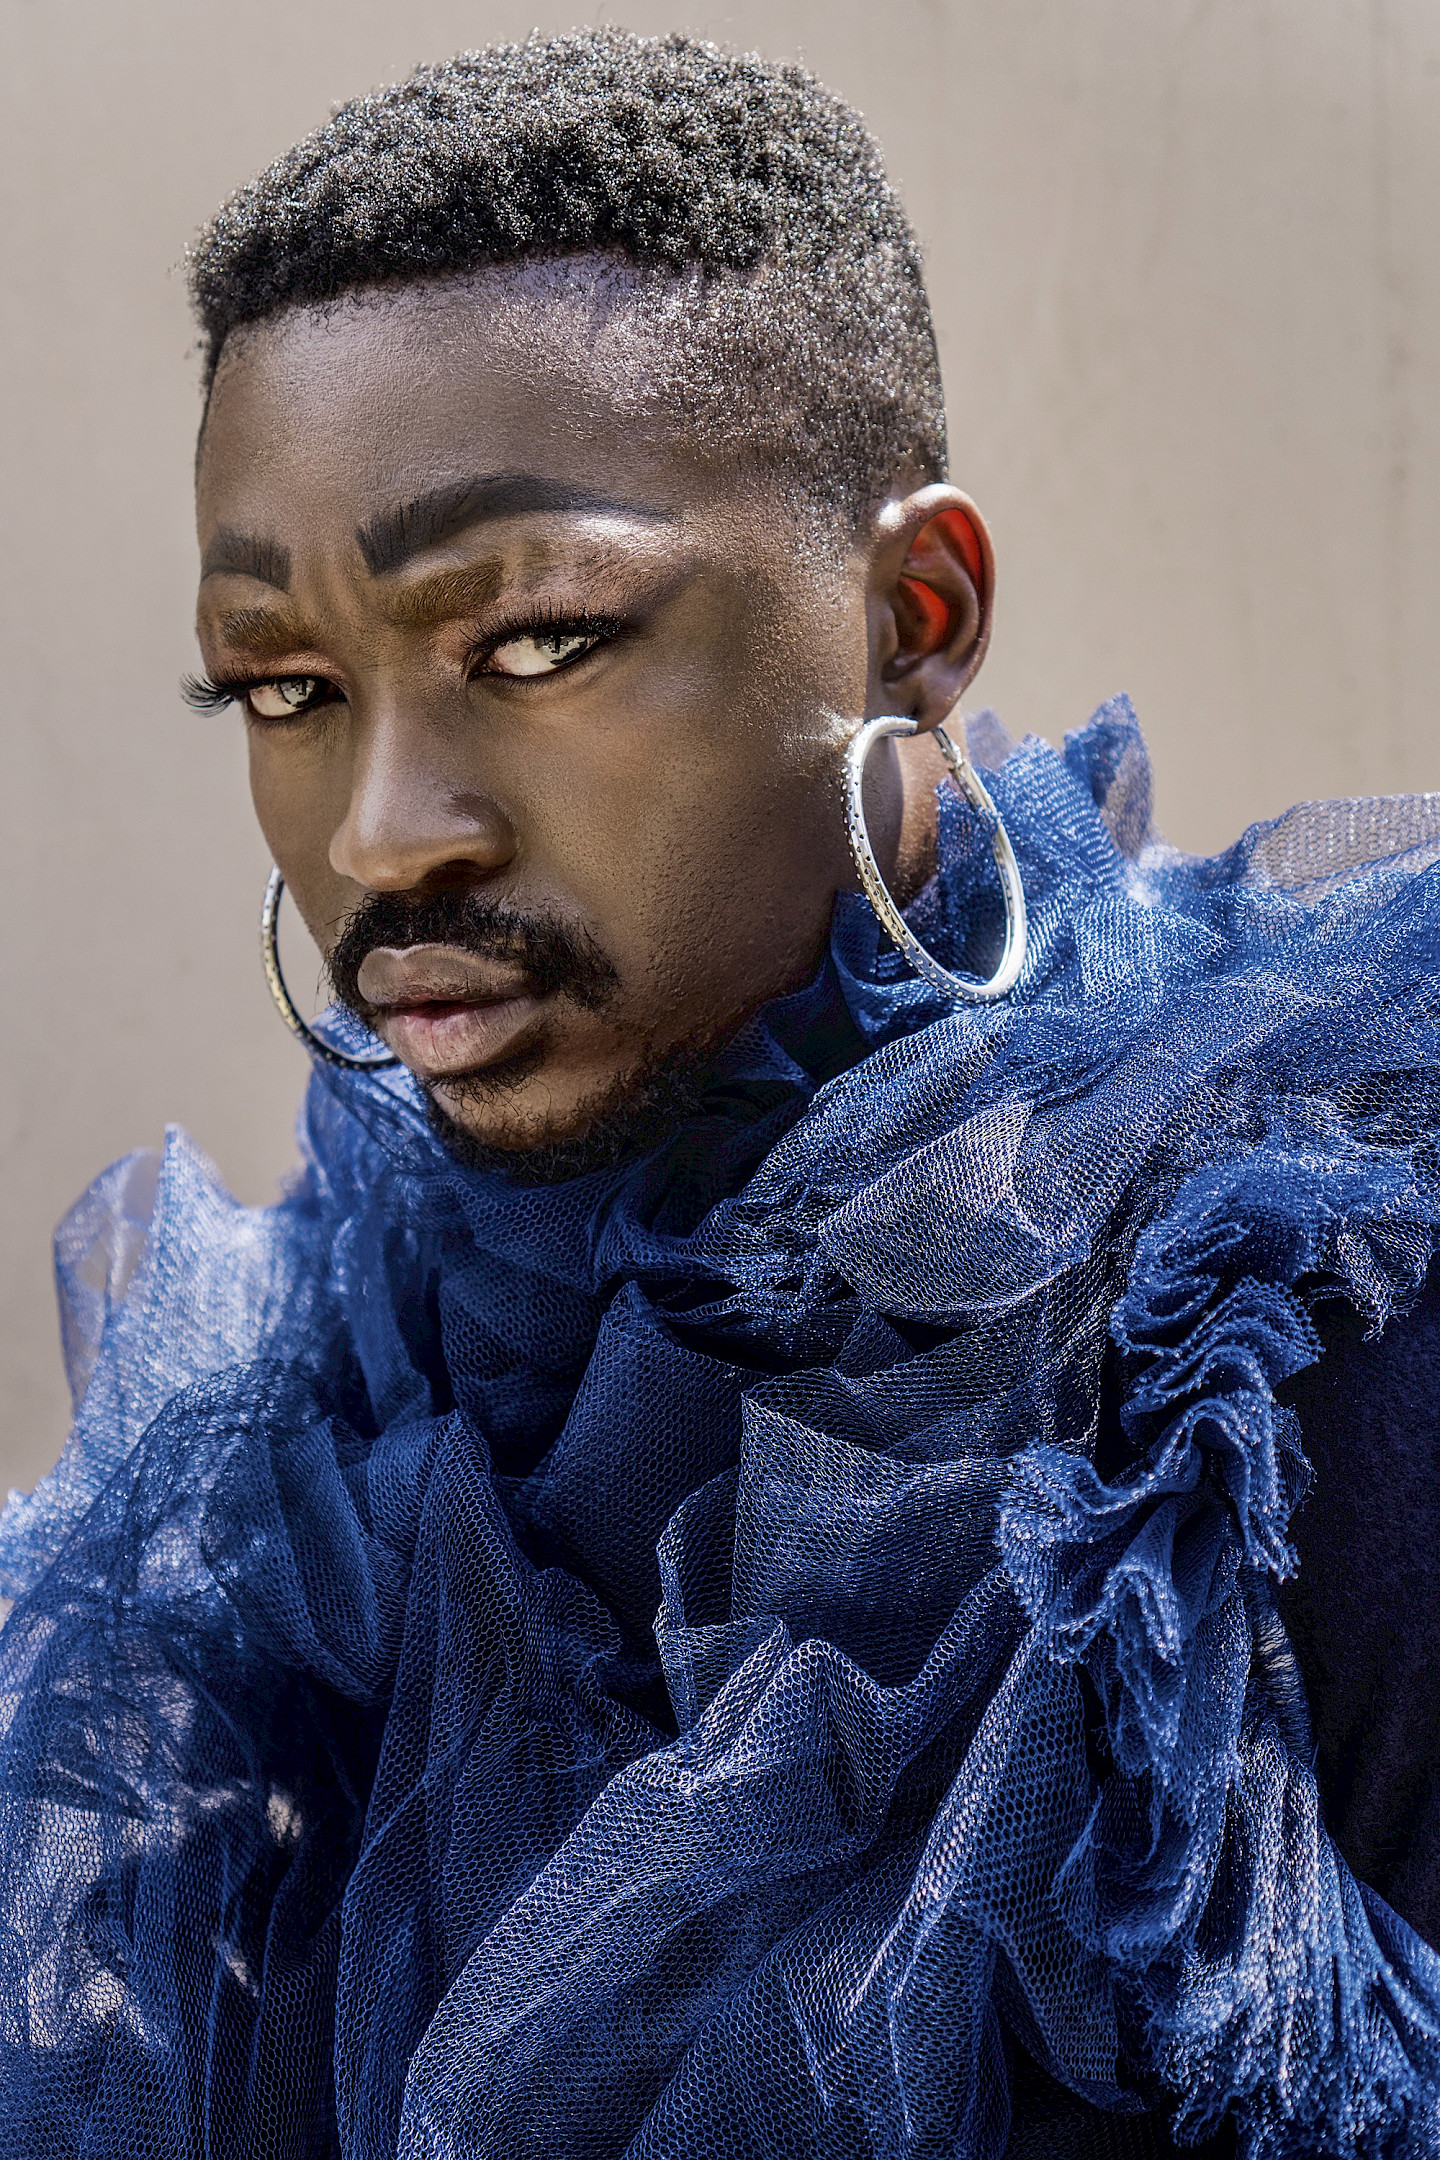 Jamal Nxedlana, FAKA Portrait, Johannesburg, 2019 © Jamal Nxedlana